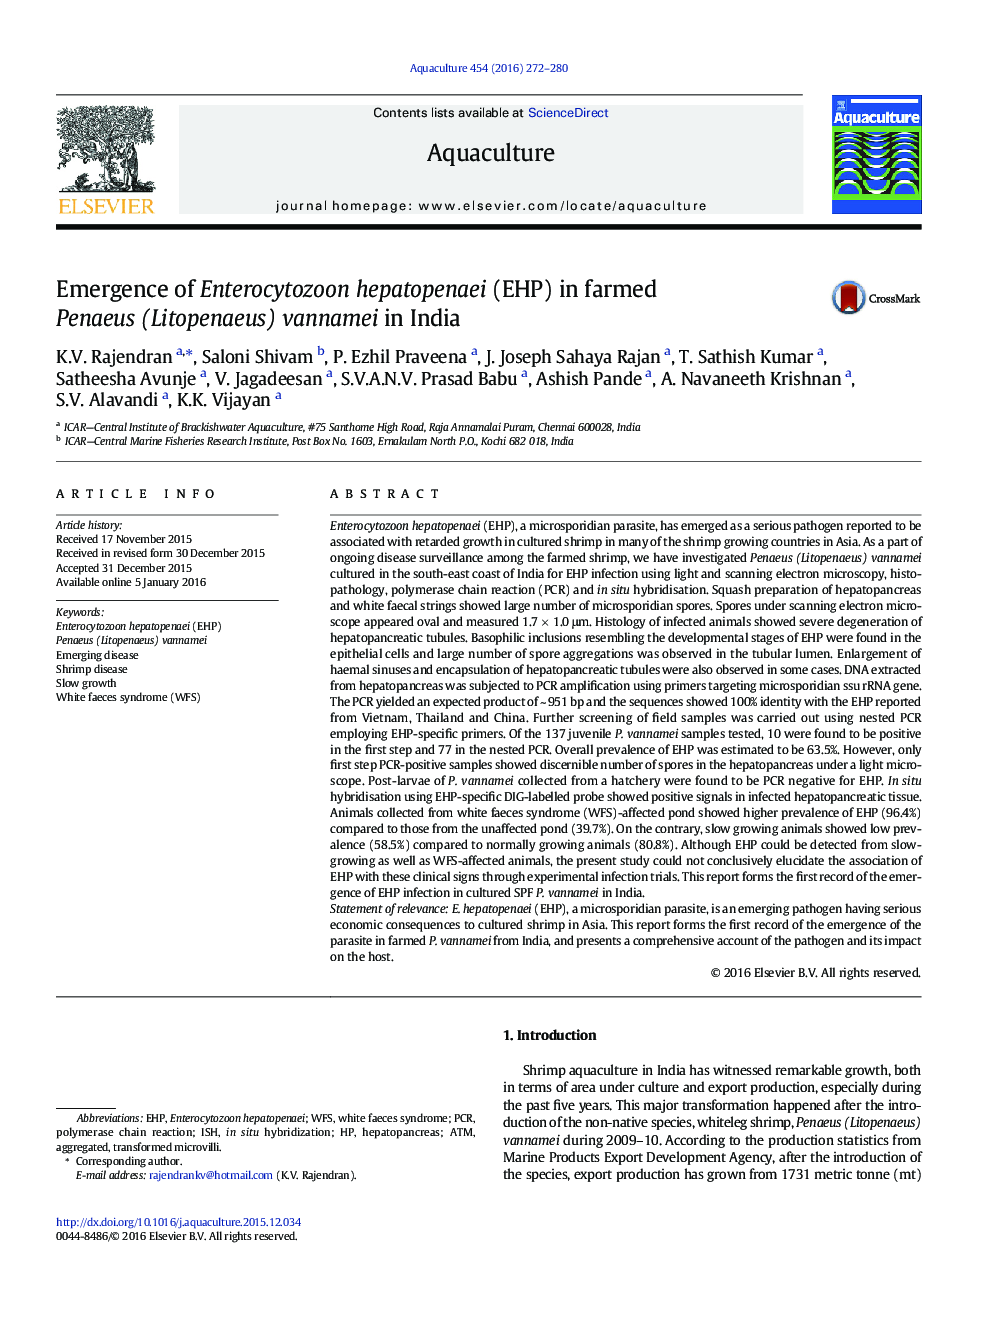 Emergence of Enterocytozoon hepatopenaei (EHP) in farmed Penaeus (Litopenaeus) vannamei in India